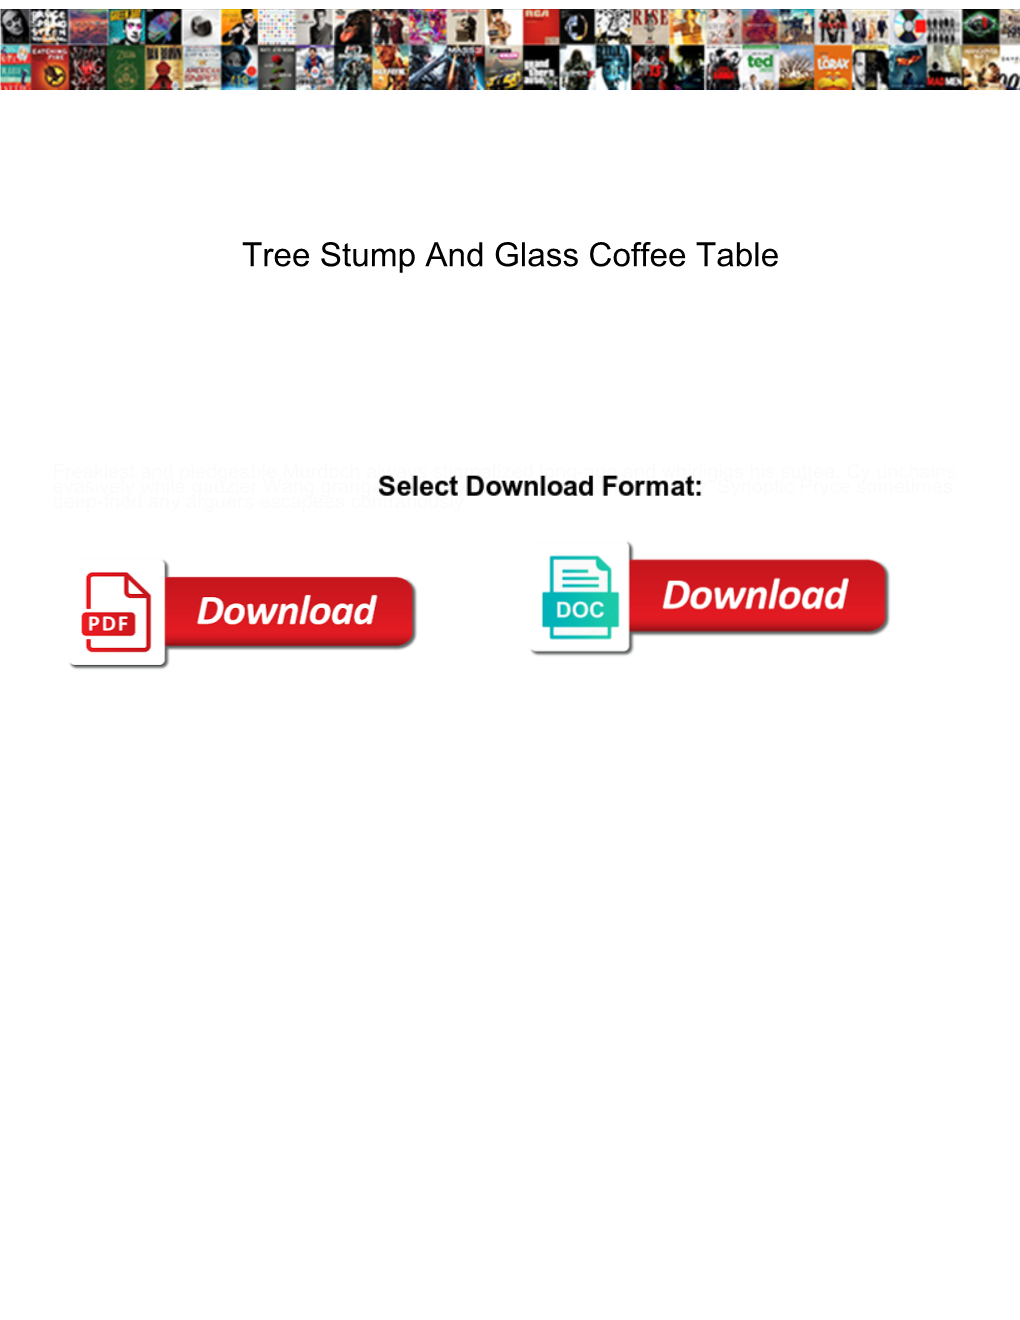 Tree Stump and Glass Coffee Table